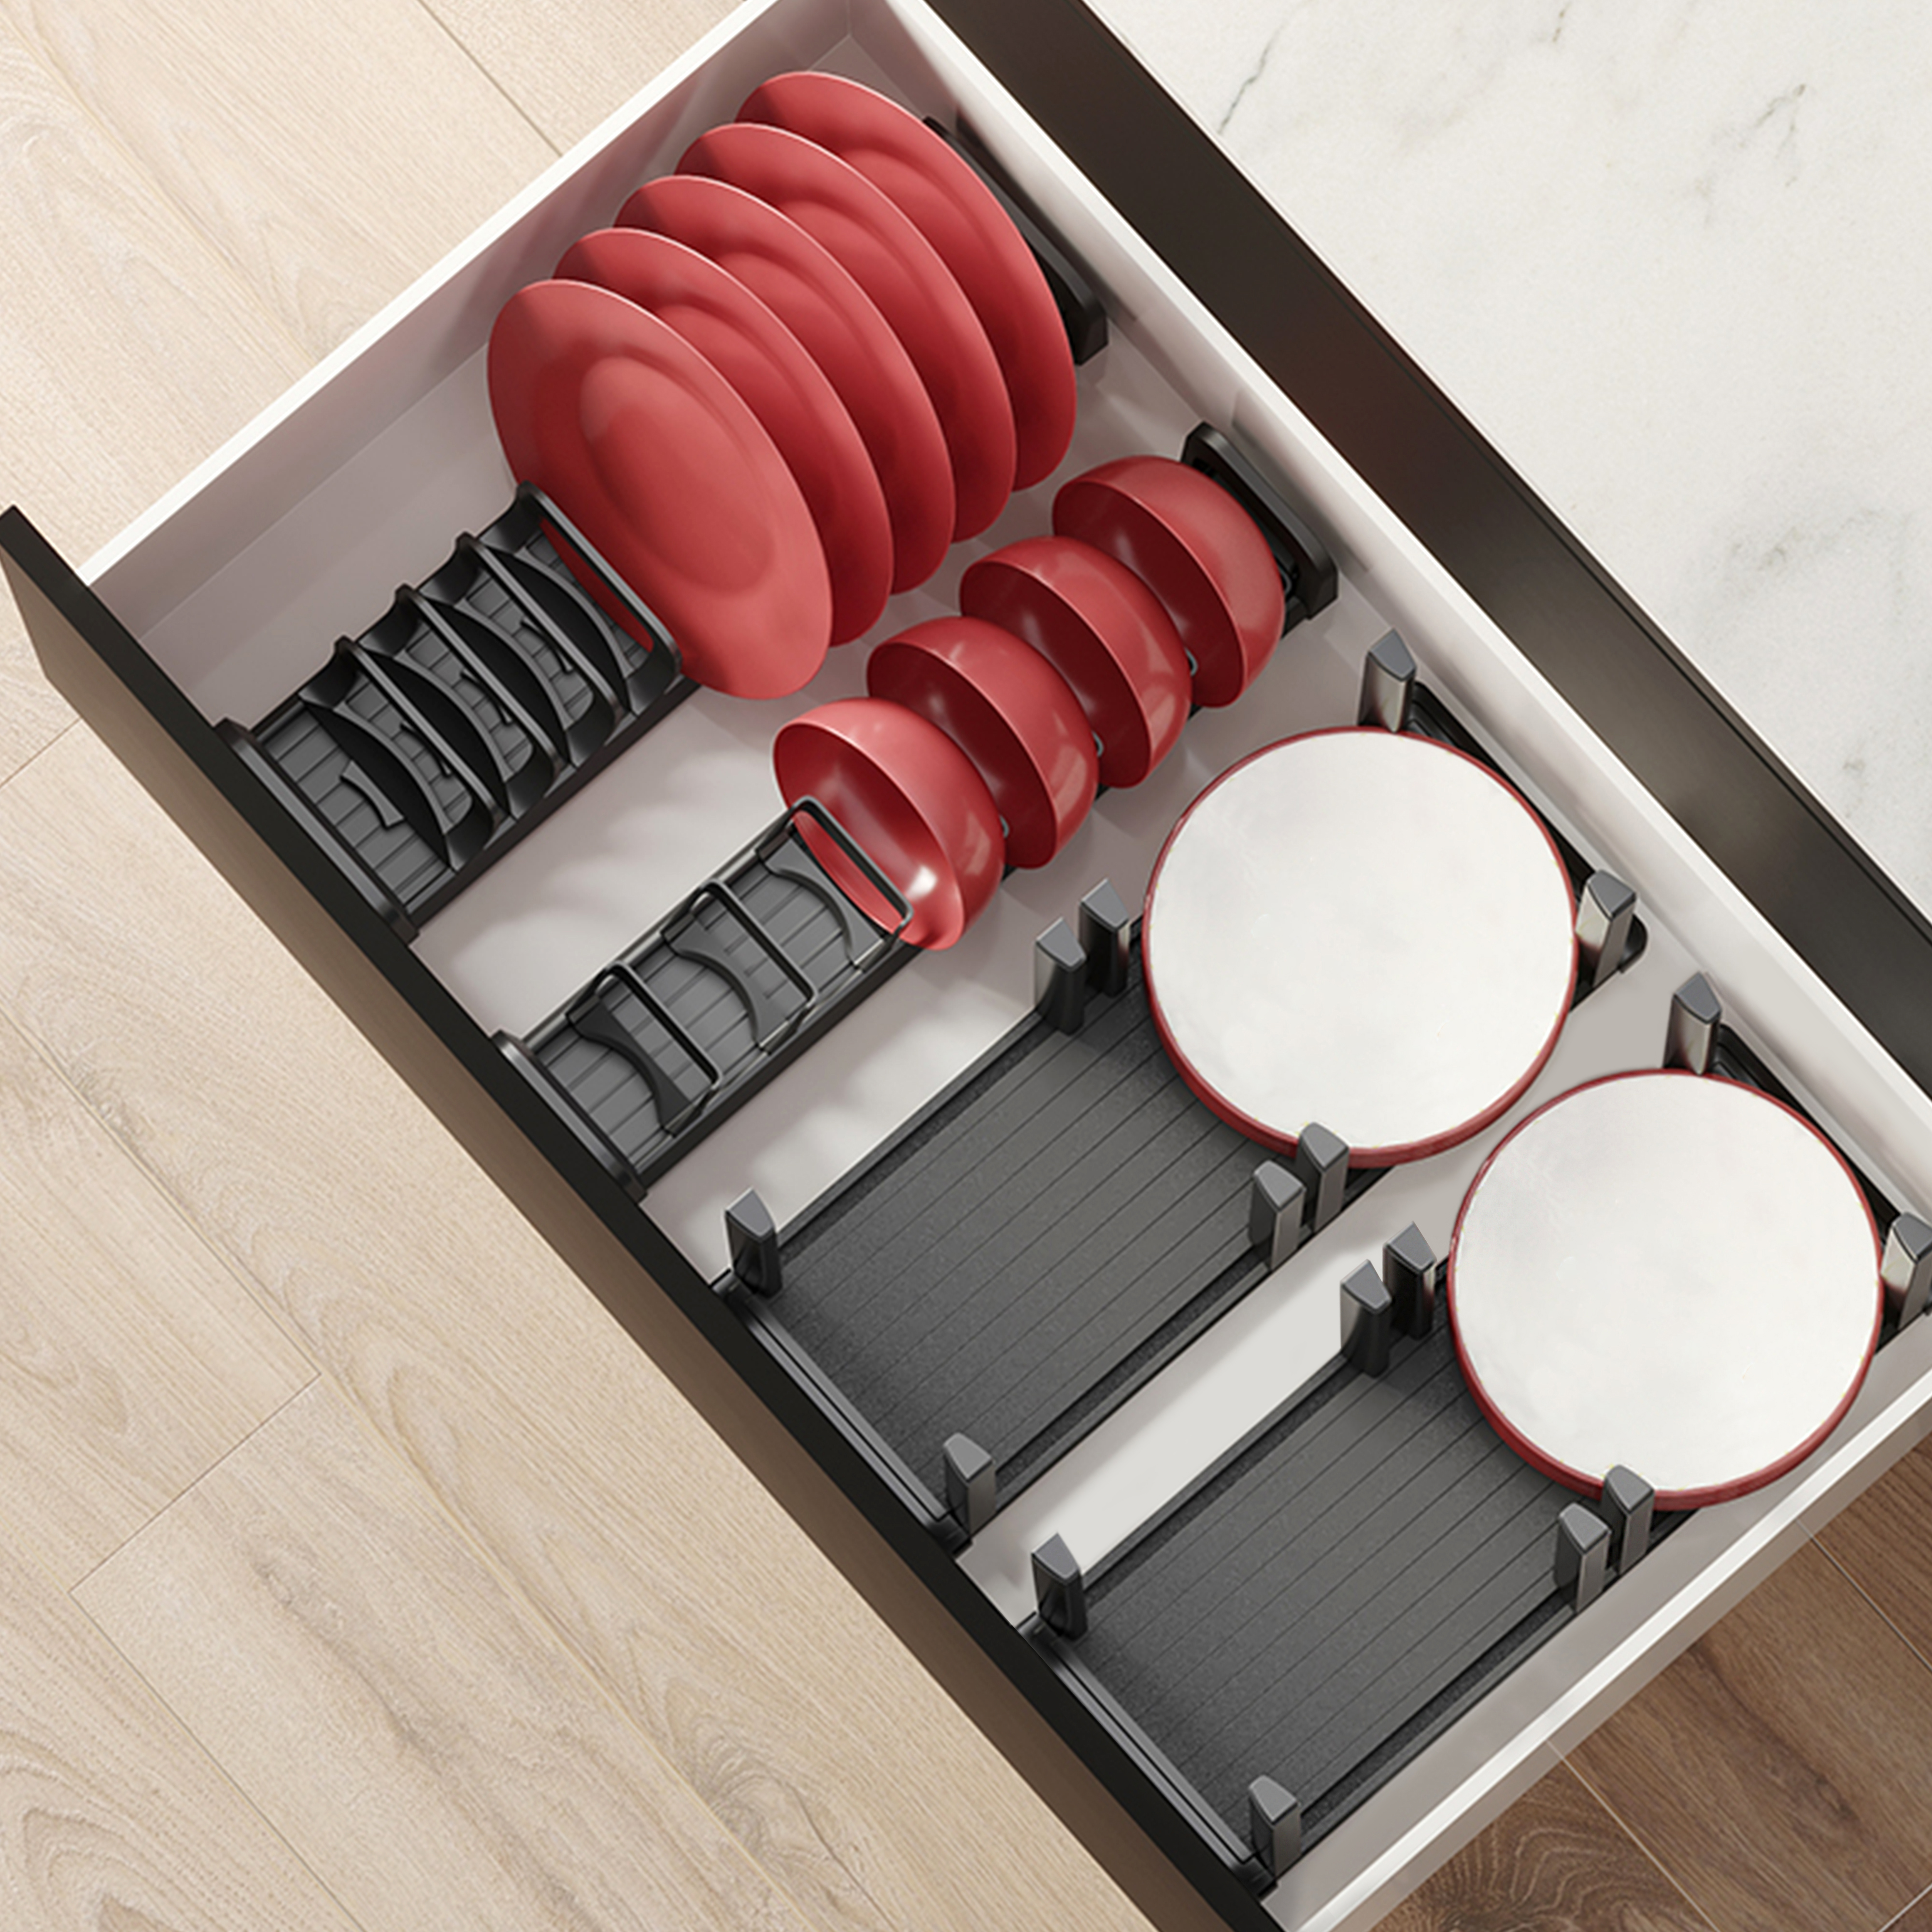  Porte-assiettes Orderbox vertical pour tiroir, 159x468 mm, Gris anthracite, Aluminium et Plastique